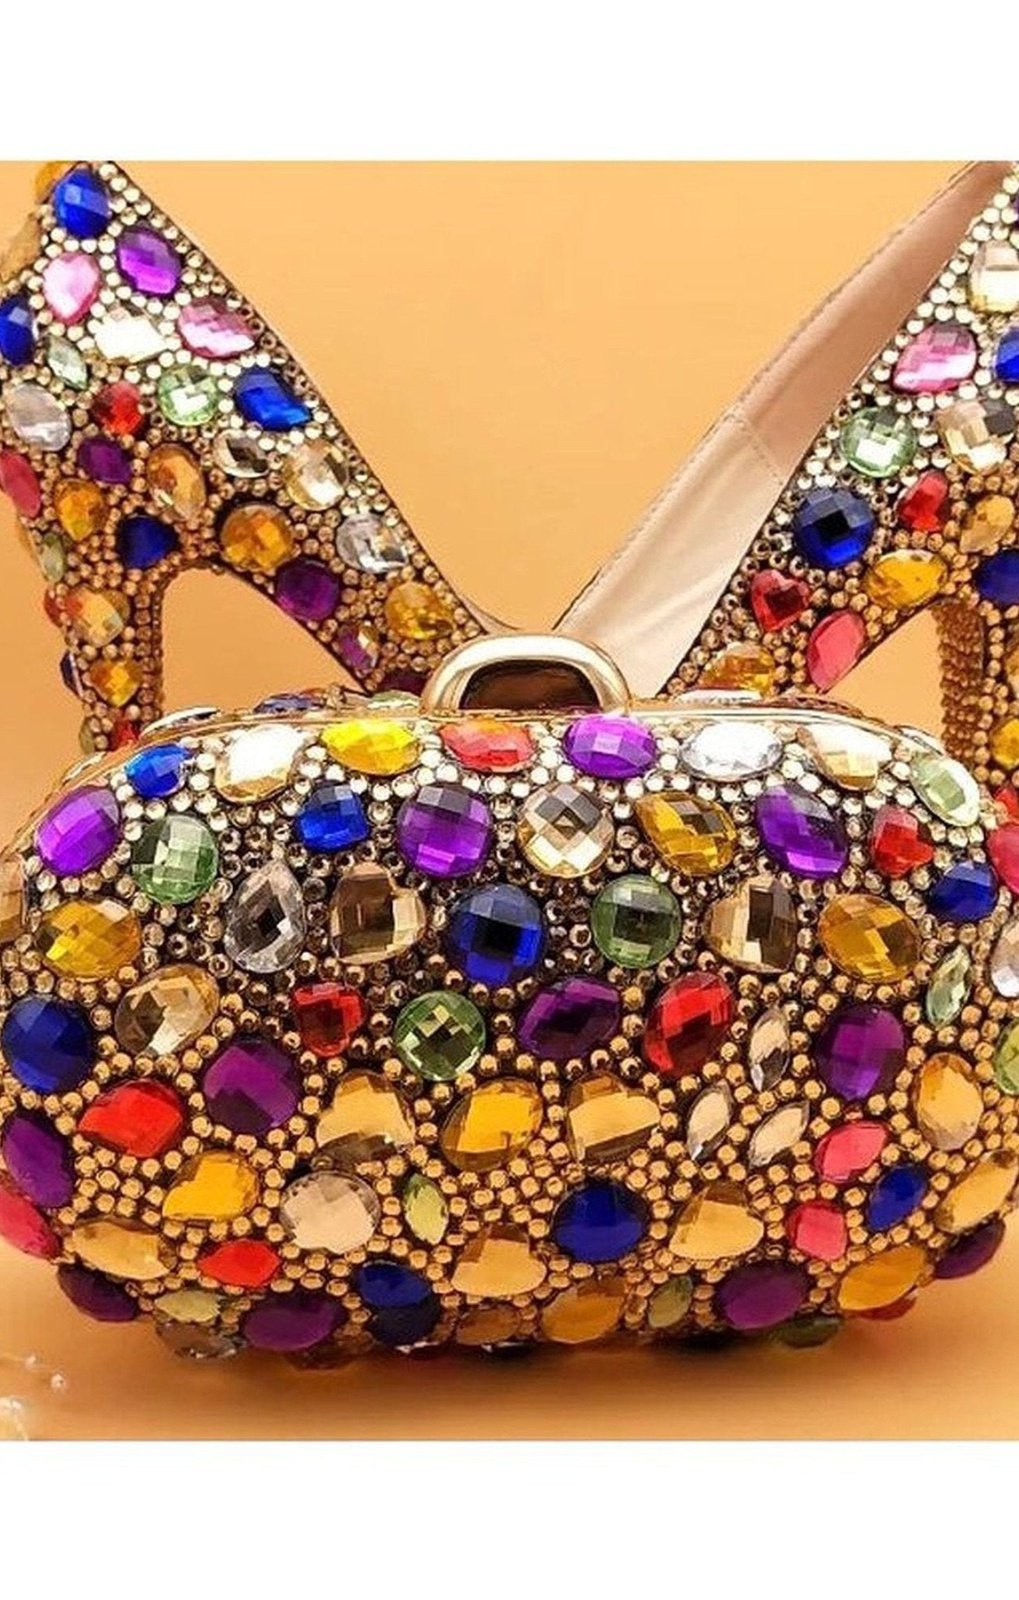 Women’s Stone heels matching clutch purse